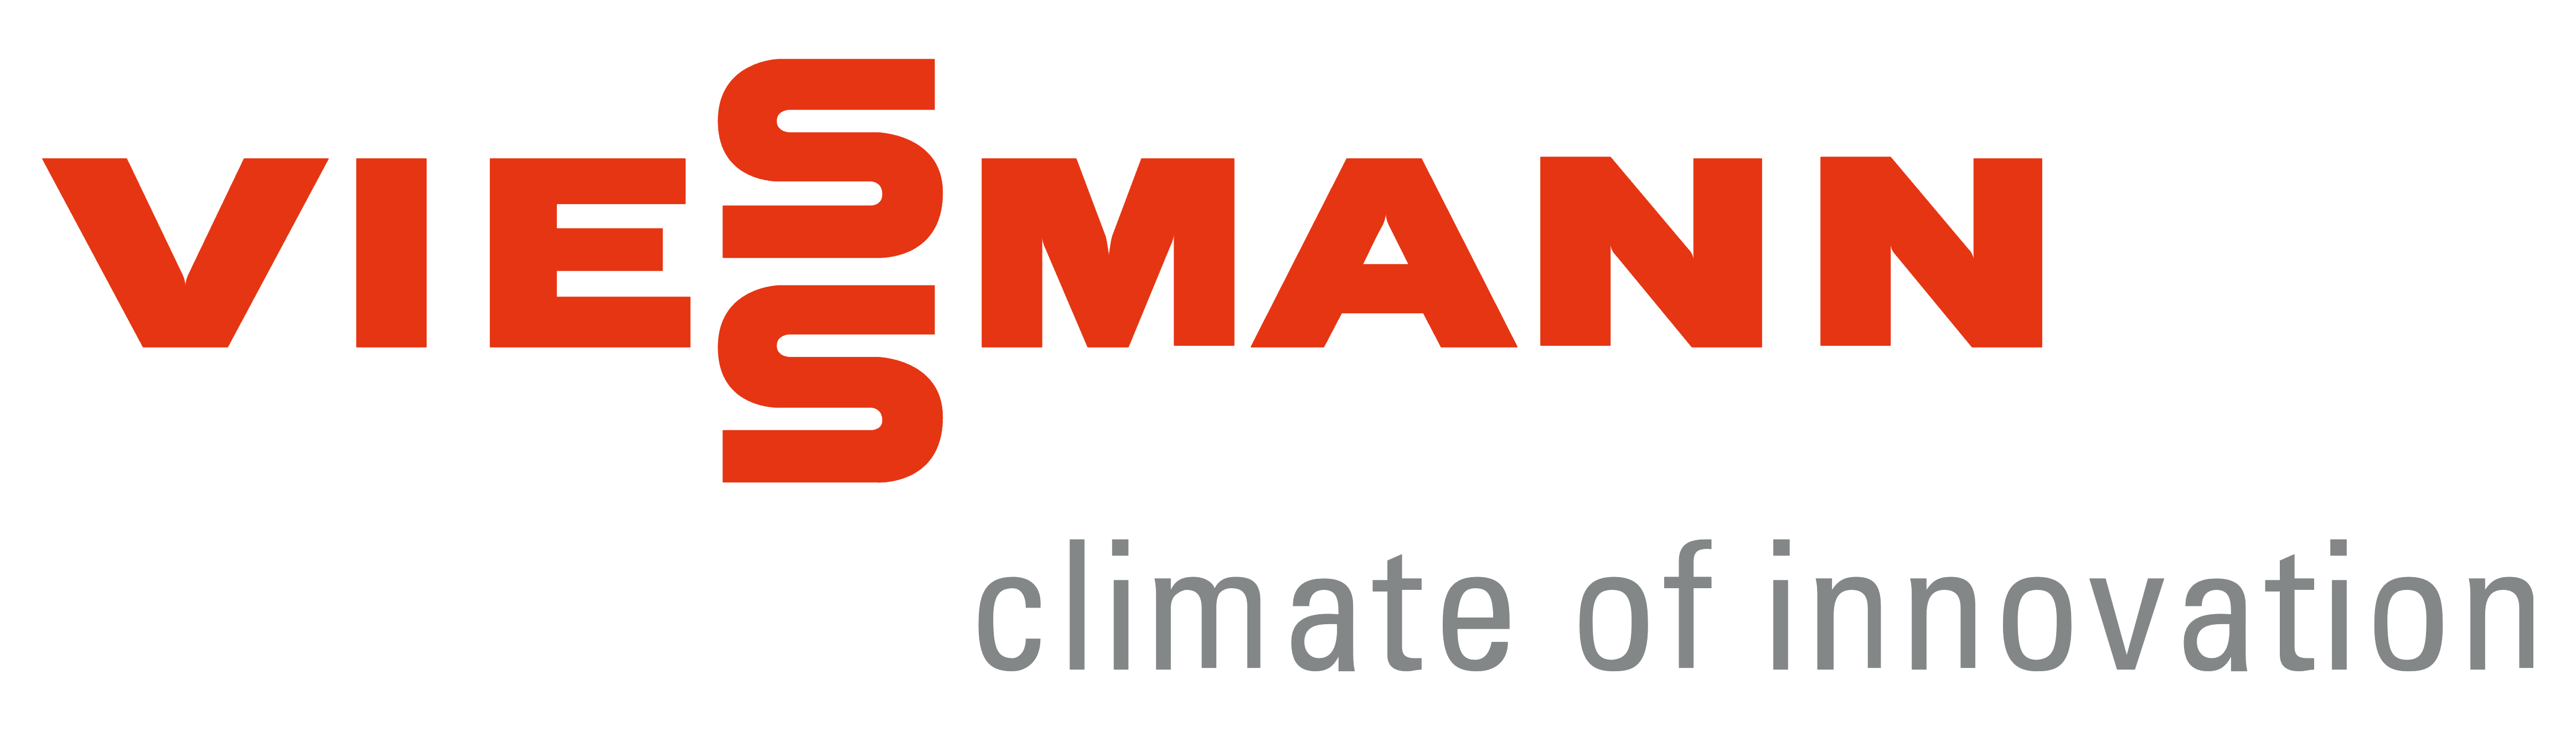 //bagterpvvs.dk/wp-content/uploads/2019/08/Viessmann_logo_slogan.png